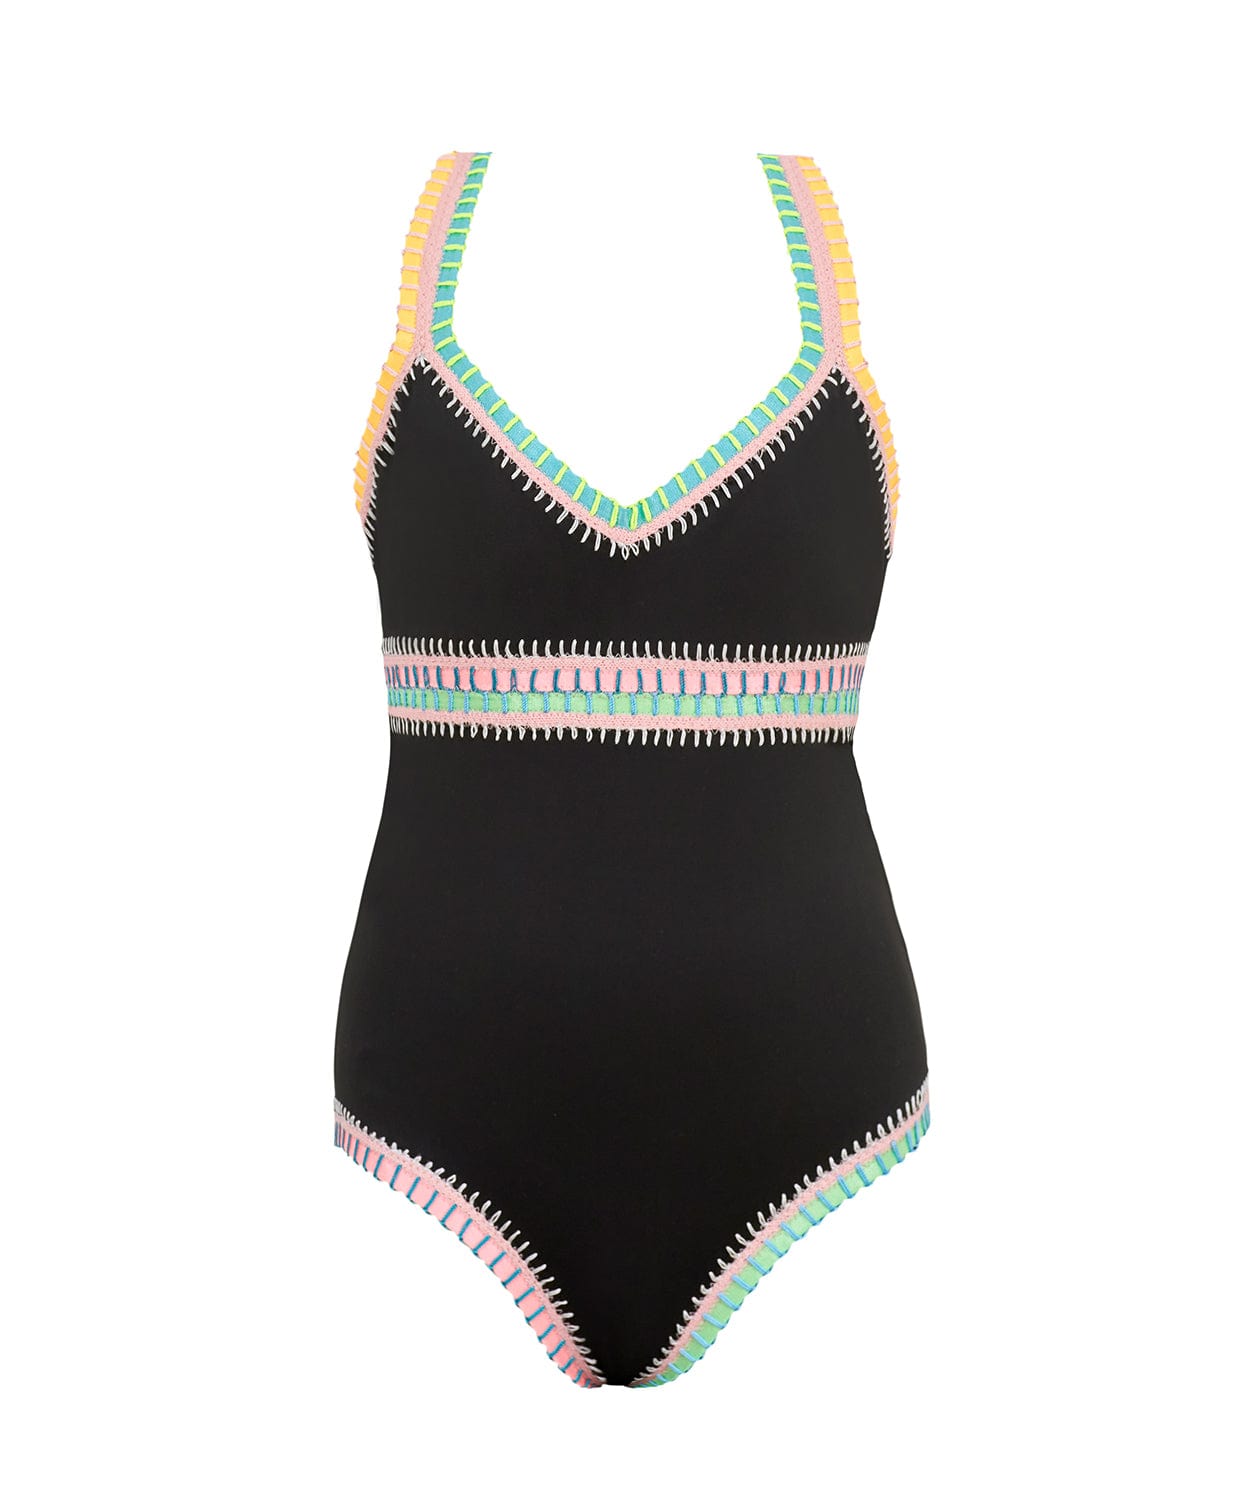 Bodysuit one-piece swimsuit with logoed elastic straps Black